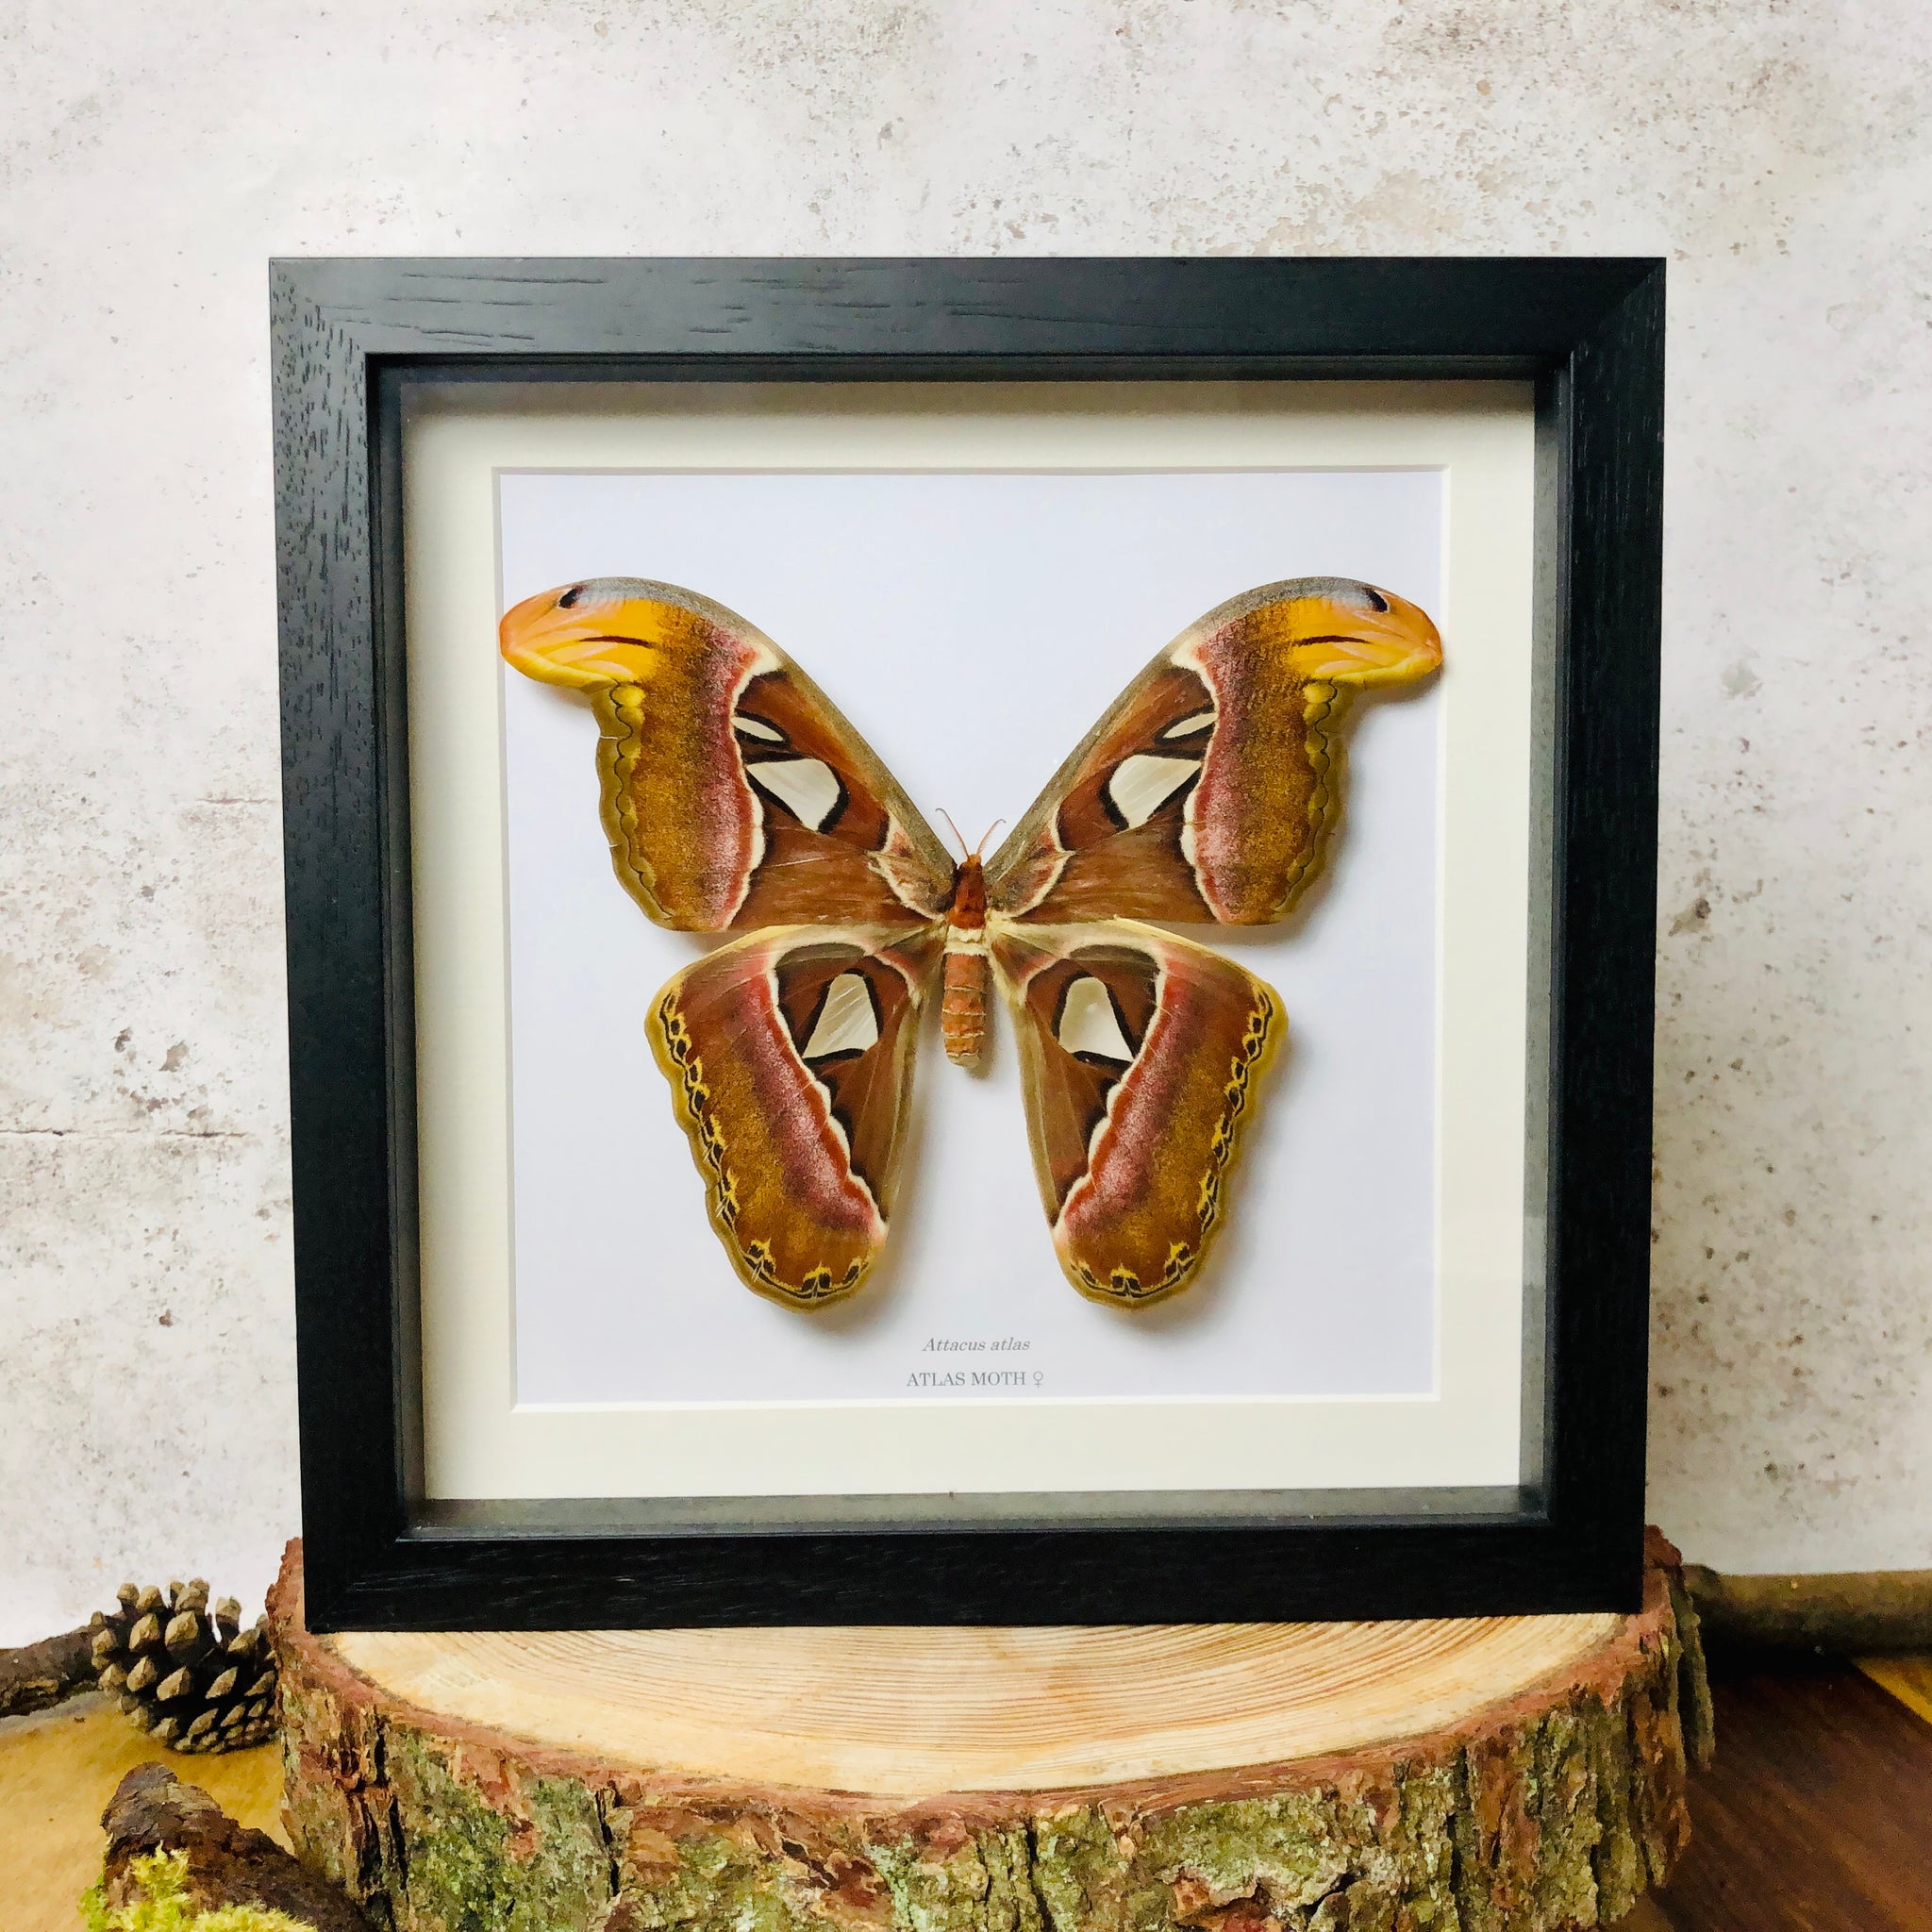 Atlas moth - Attacus atlas